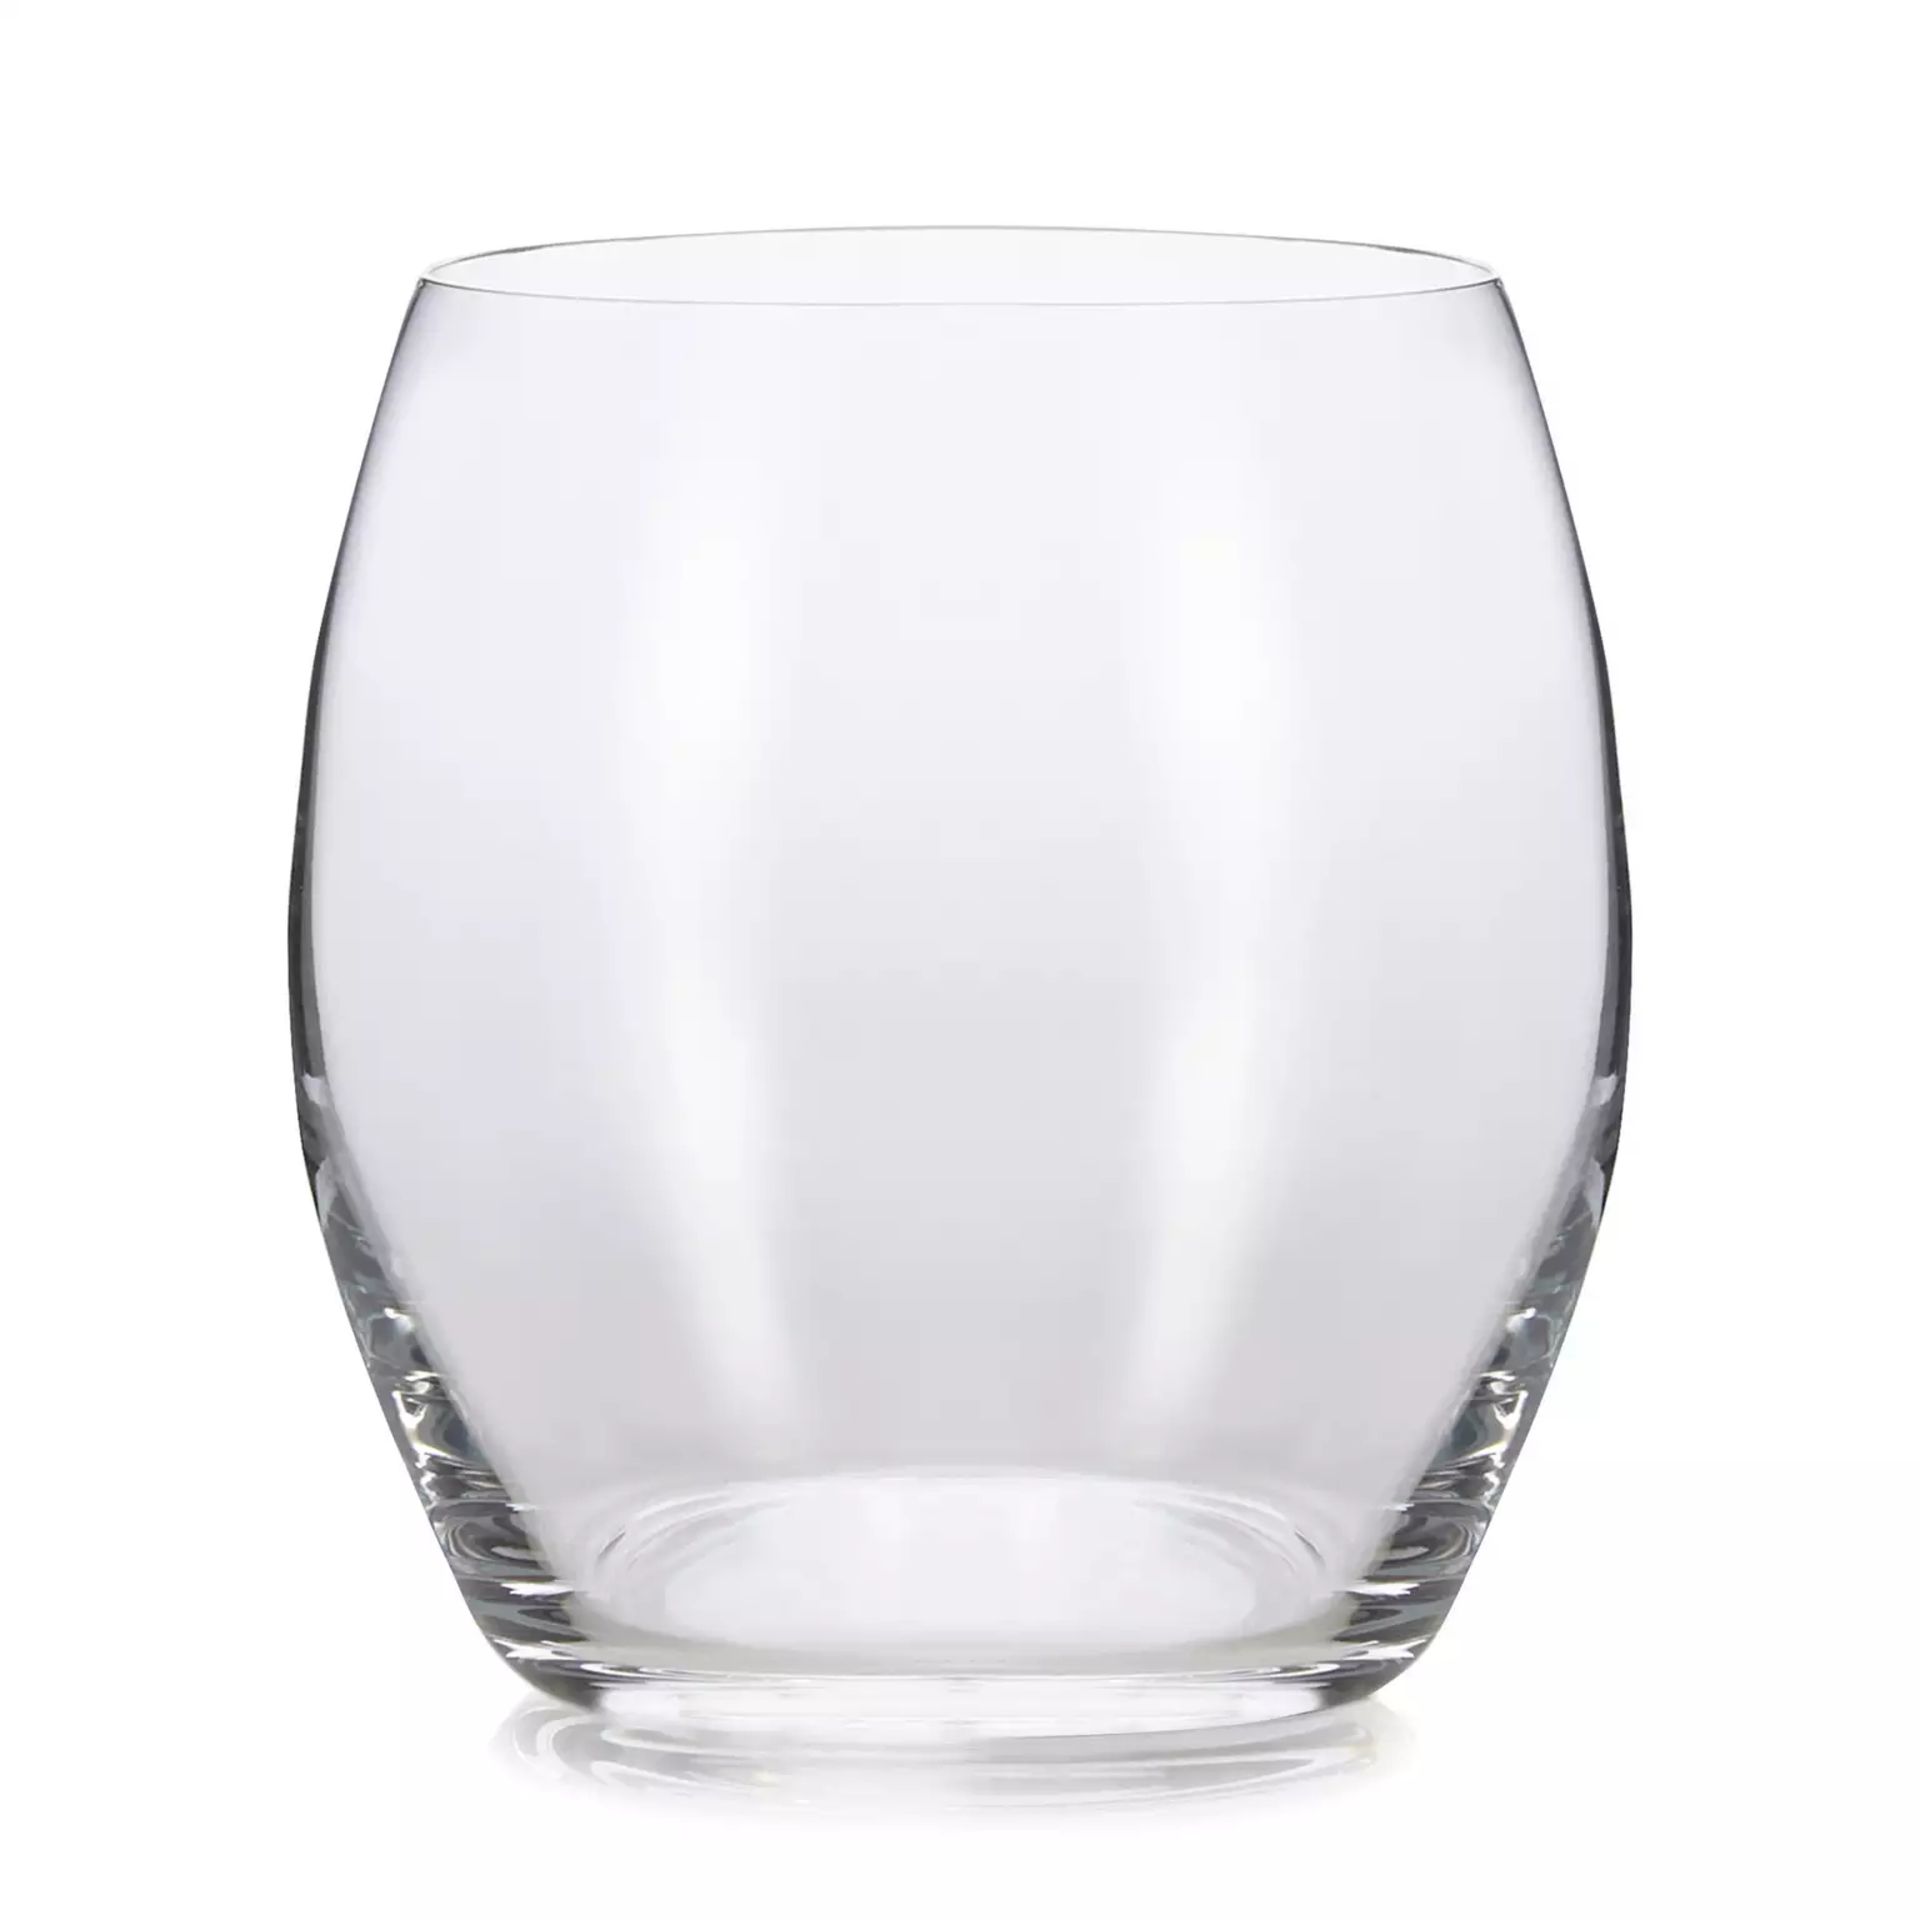 Brand New Debenhams Jasper Conran - Set of 4 'Davenport' Tumbler Crystal Glasses - RRP £25. - Image 2 of 2